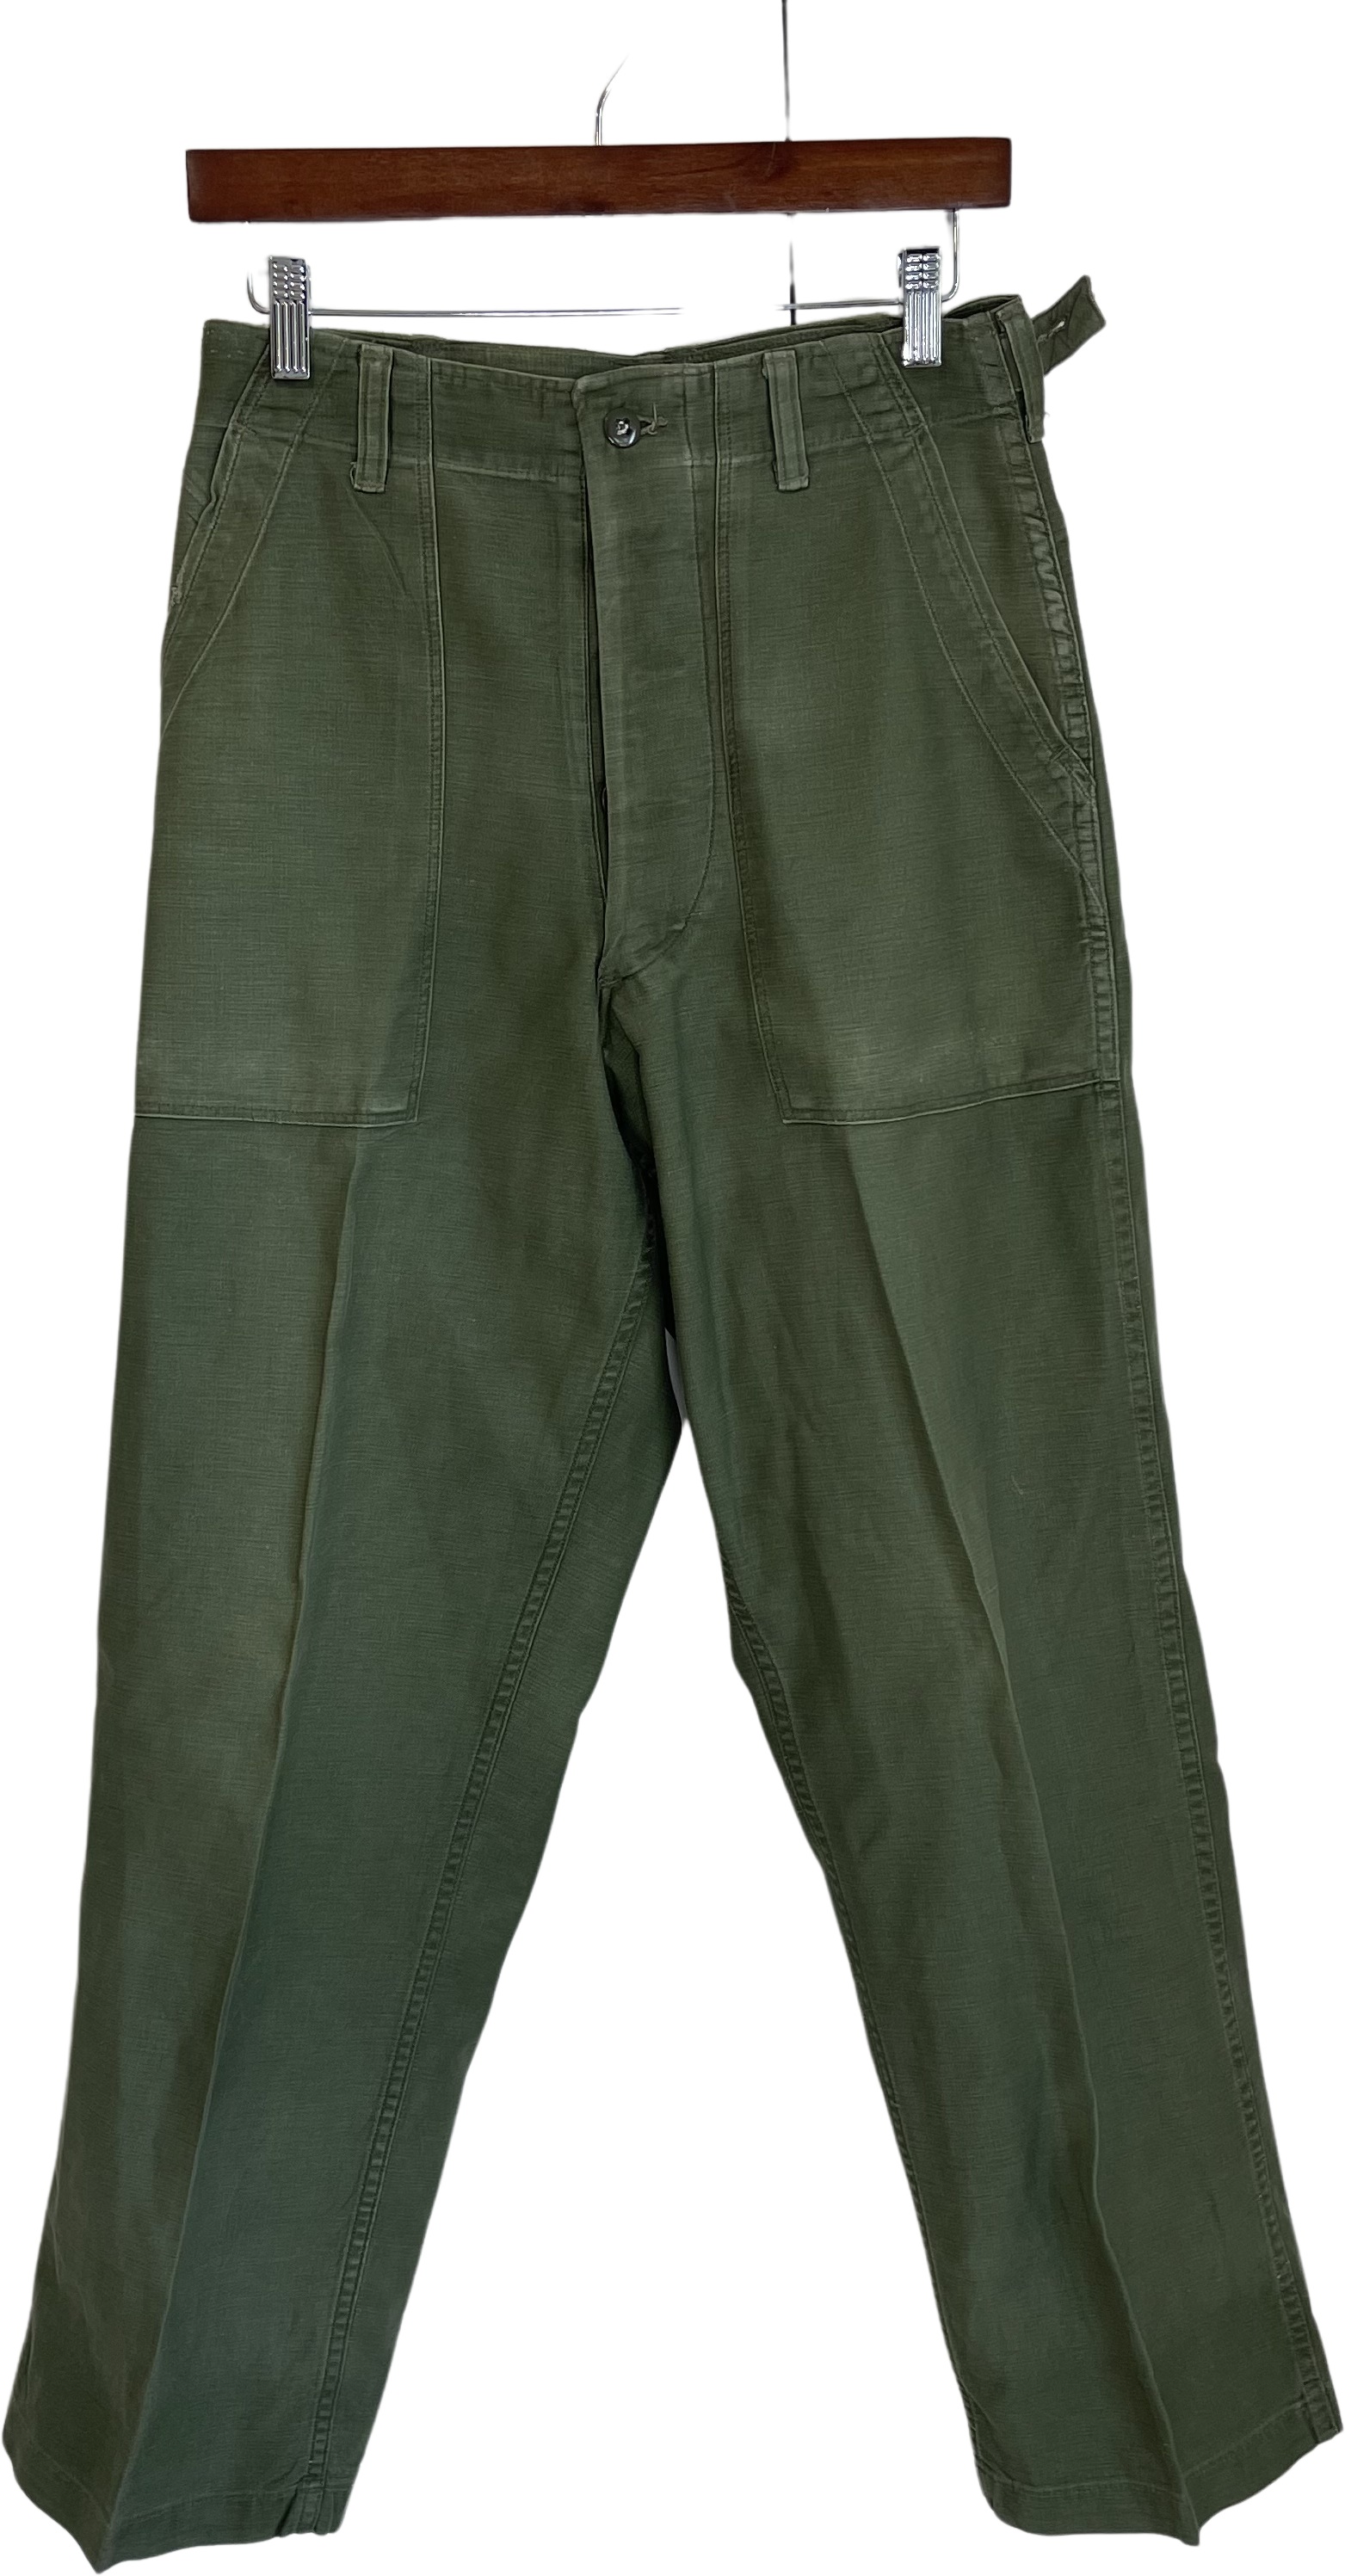 90s-00s【Royal Navy】Military Cargo pants - ワークパンツ/カーゴパンツ